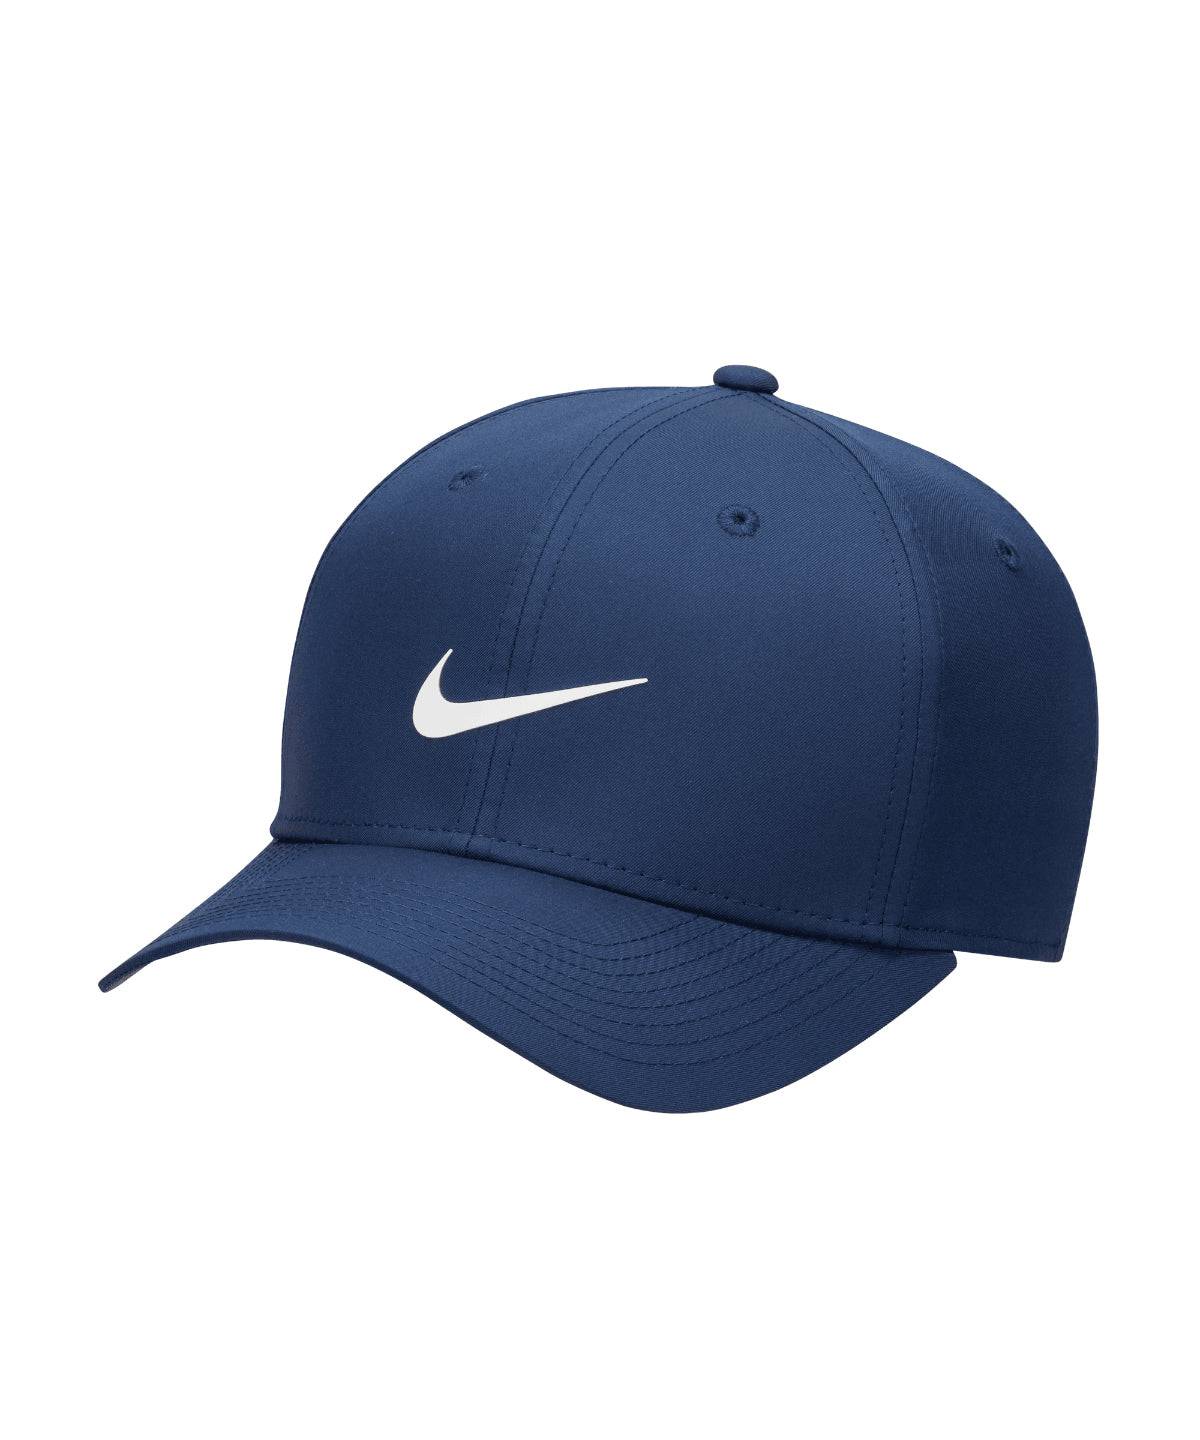 Industrial Blue/ Anthracite/ White - Nike Dri-FIT Rise cap